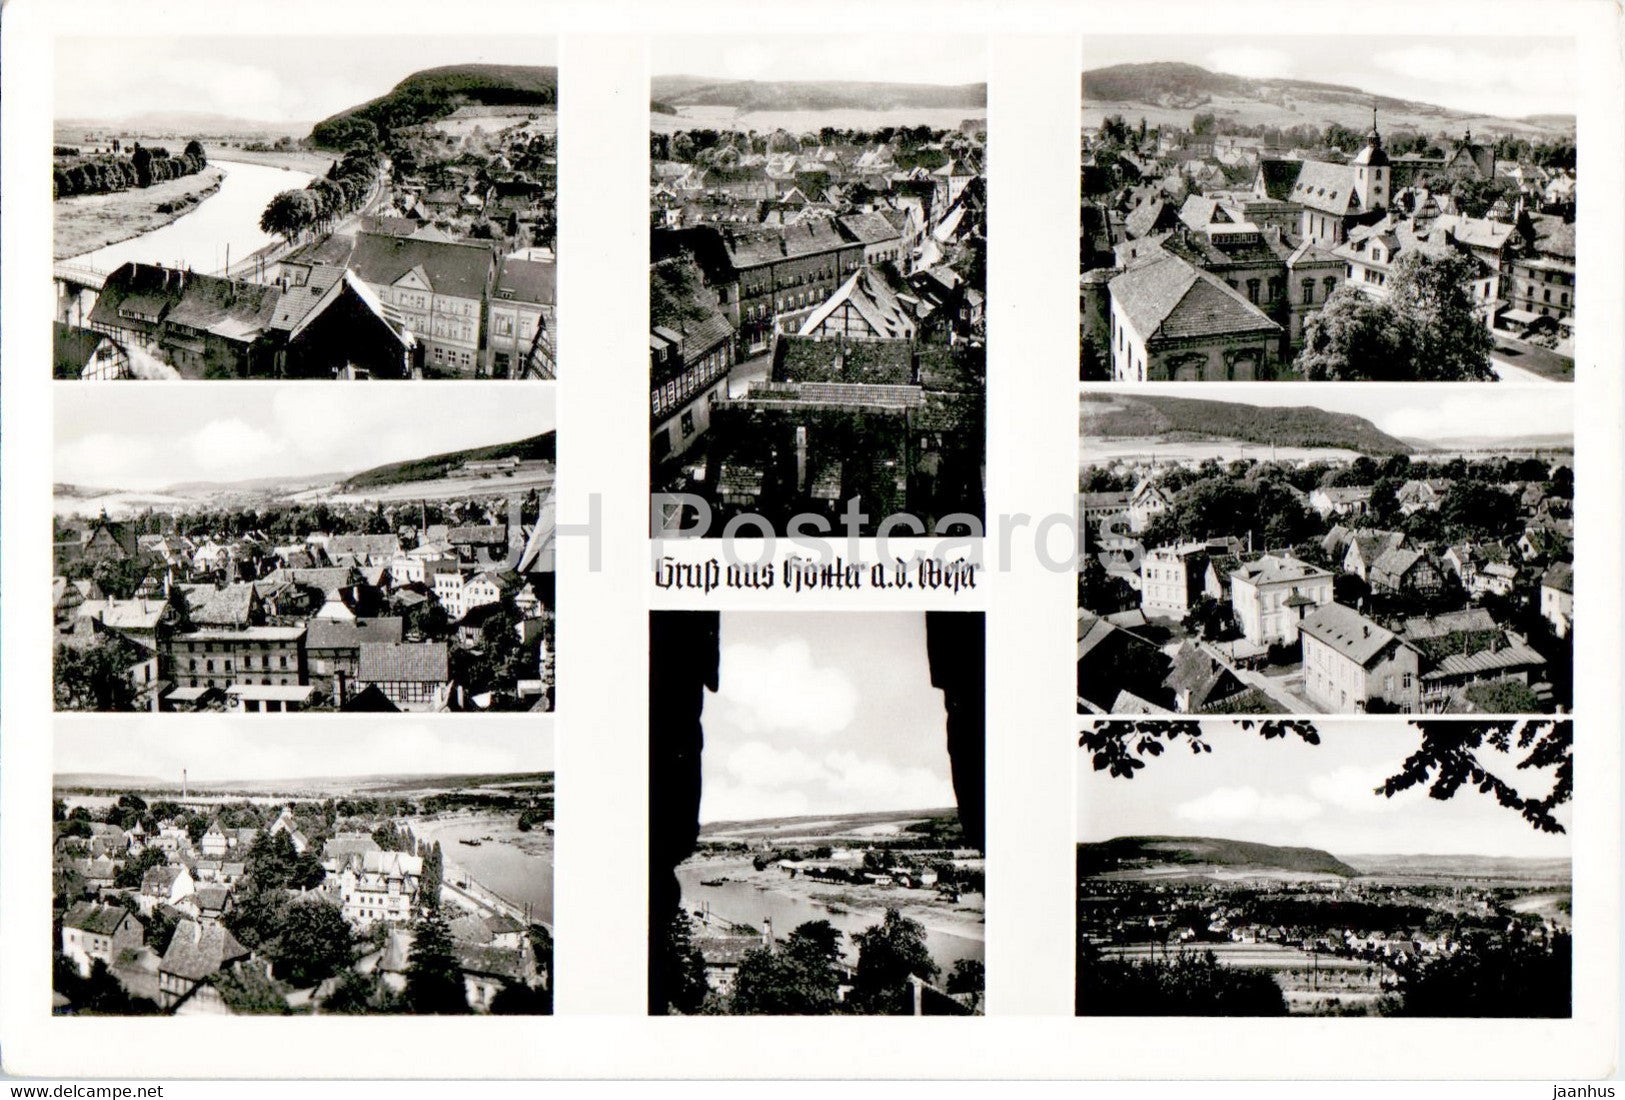 Gruss aus Hoxter a d Weser - Rundblick vom Turm der Kiliankirche - old postcard - 1954 - Germany - used - JH Postcards